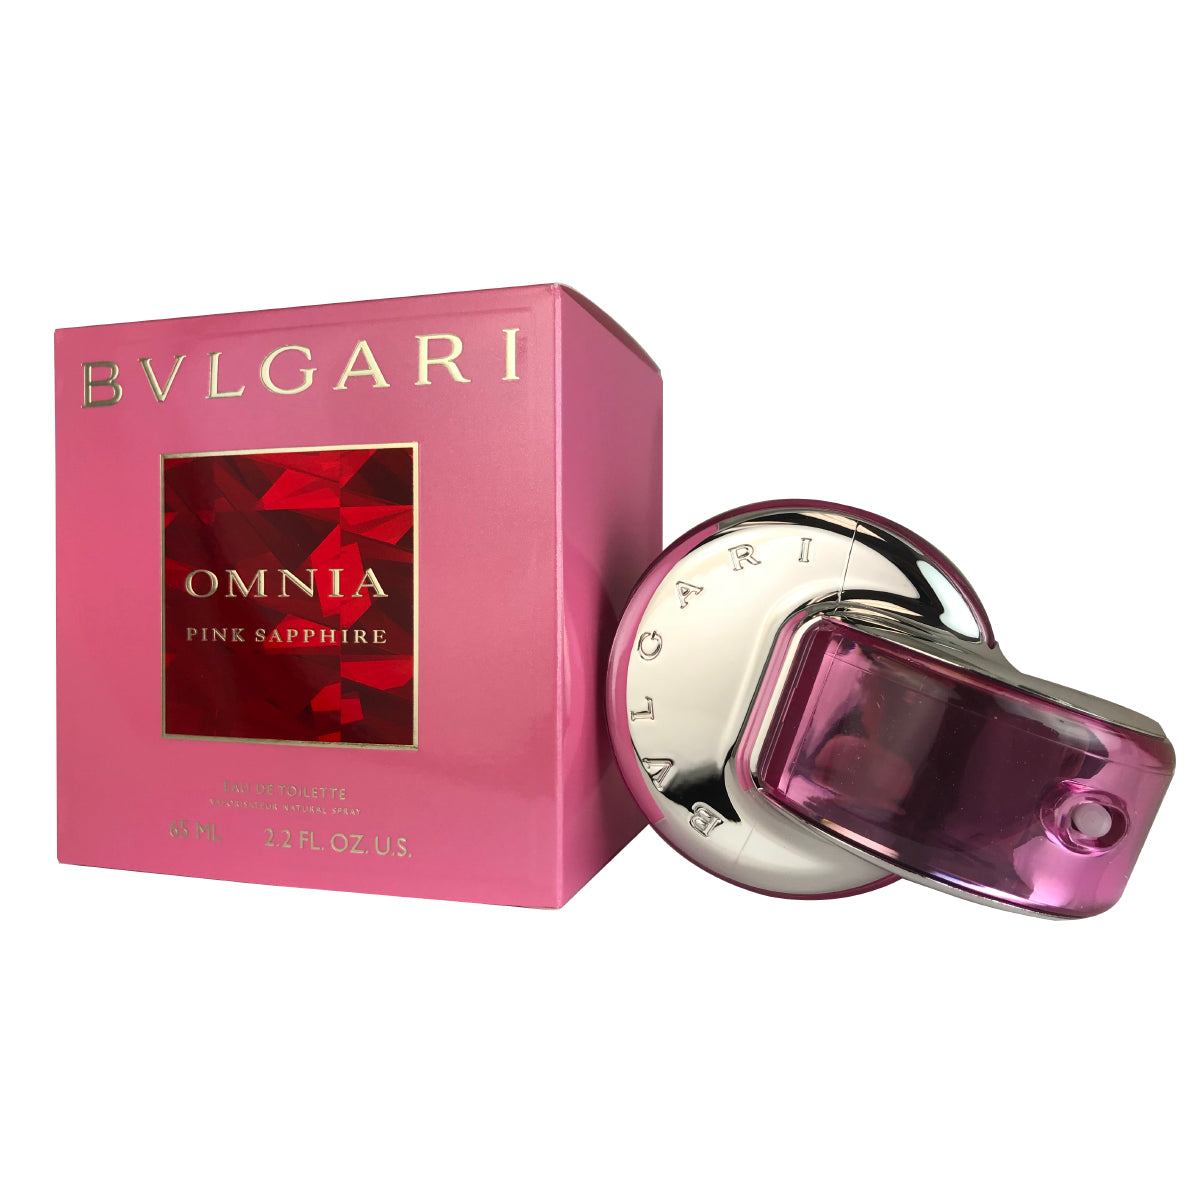 Bvlgari Omnia Pink Sapphire for Women by Bvlgari 2.2 oz Eau De Toilette Spray